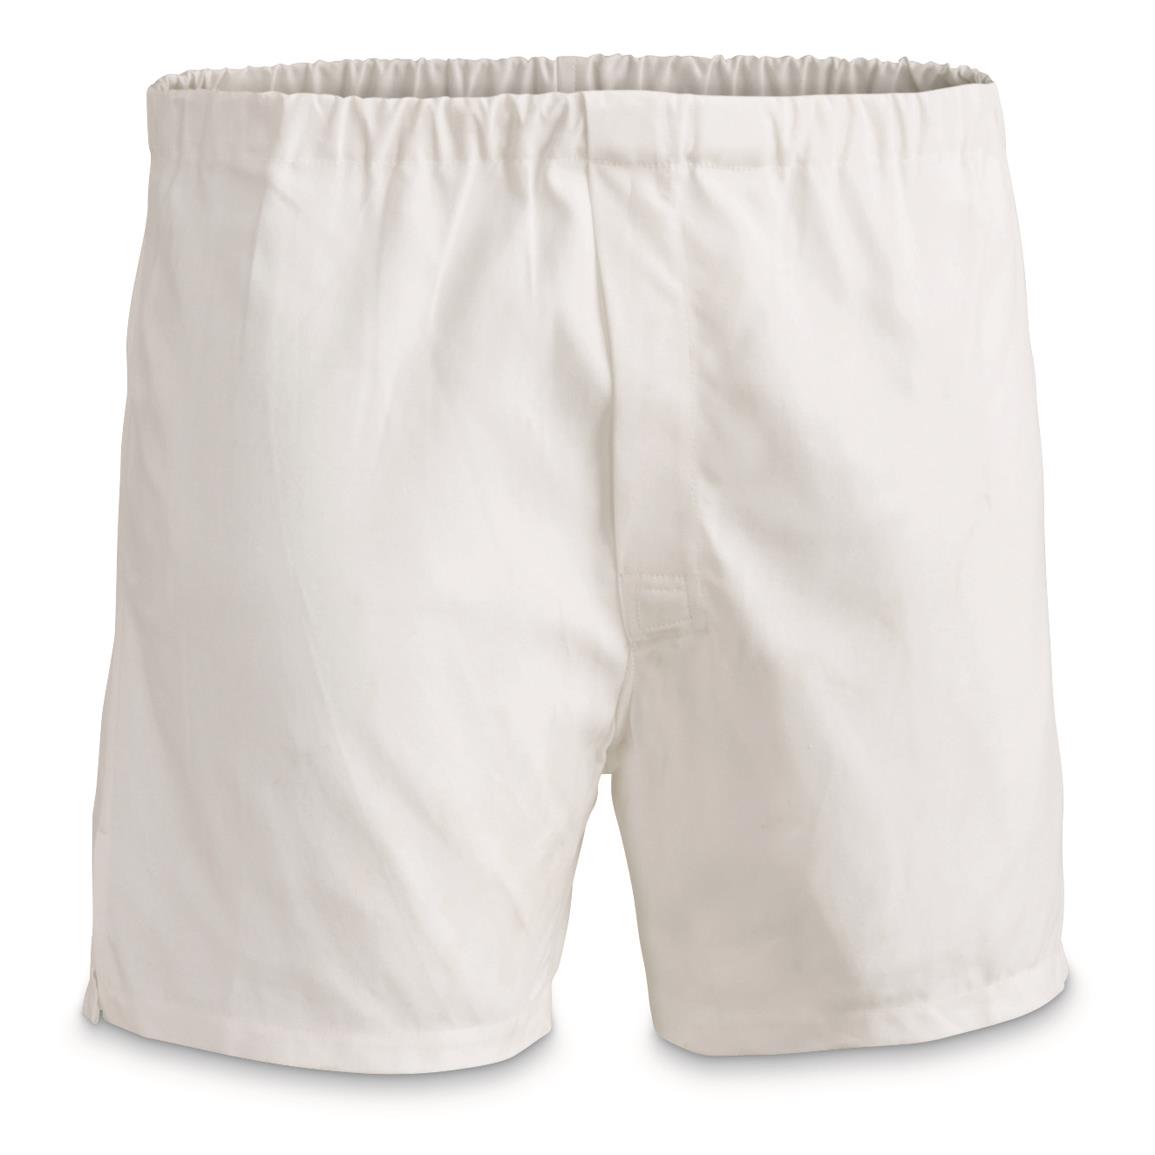 Romanian Military Surplus Cotton Boxer Shorts, 10 Pack, New, White